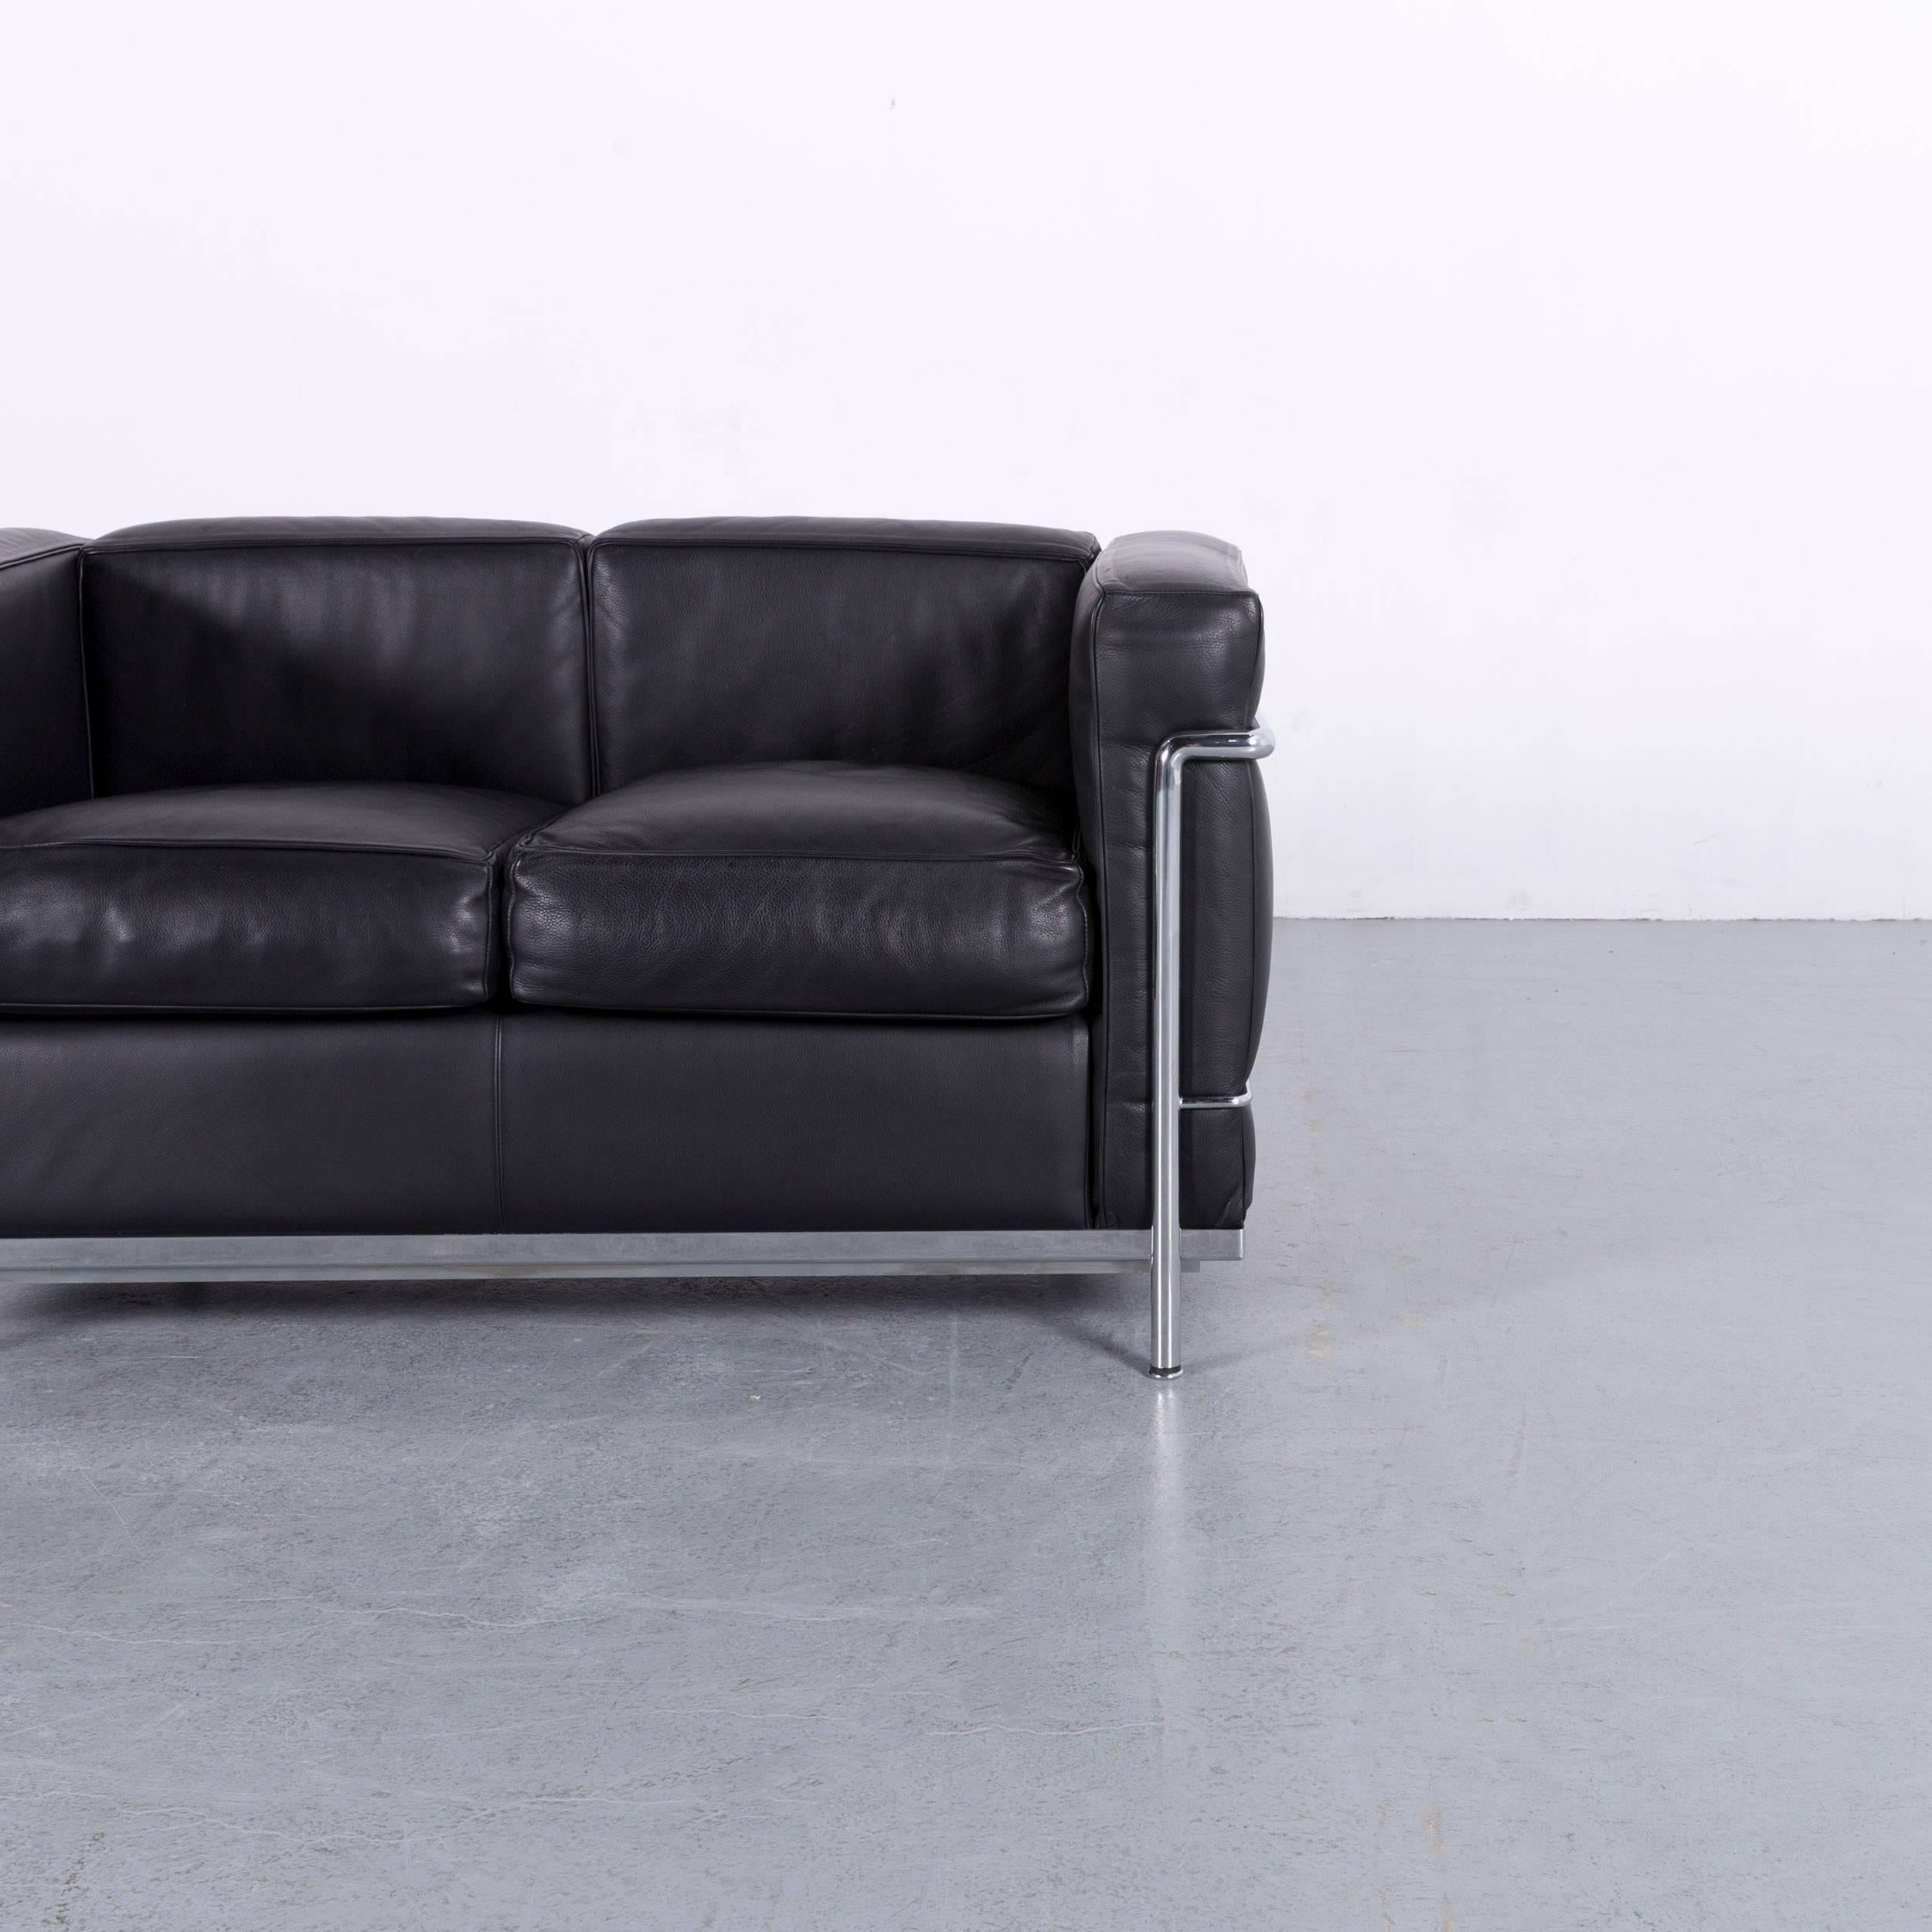 Italian Cassina Le Corbusier LC 2 Leather Sofa Black Two-Seat For Sale